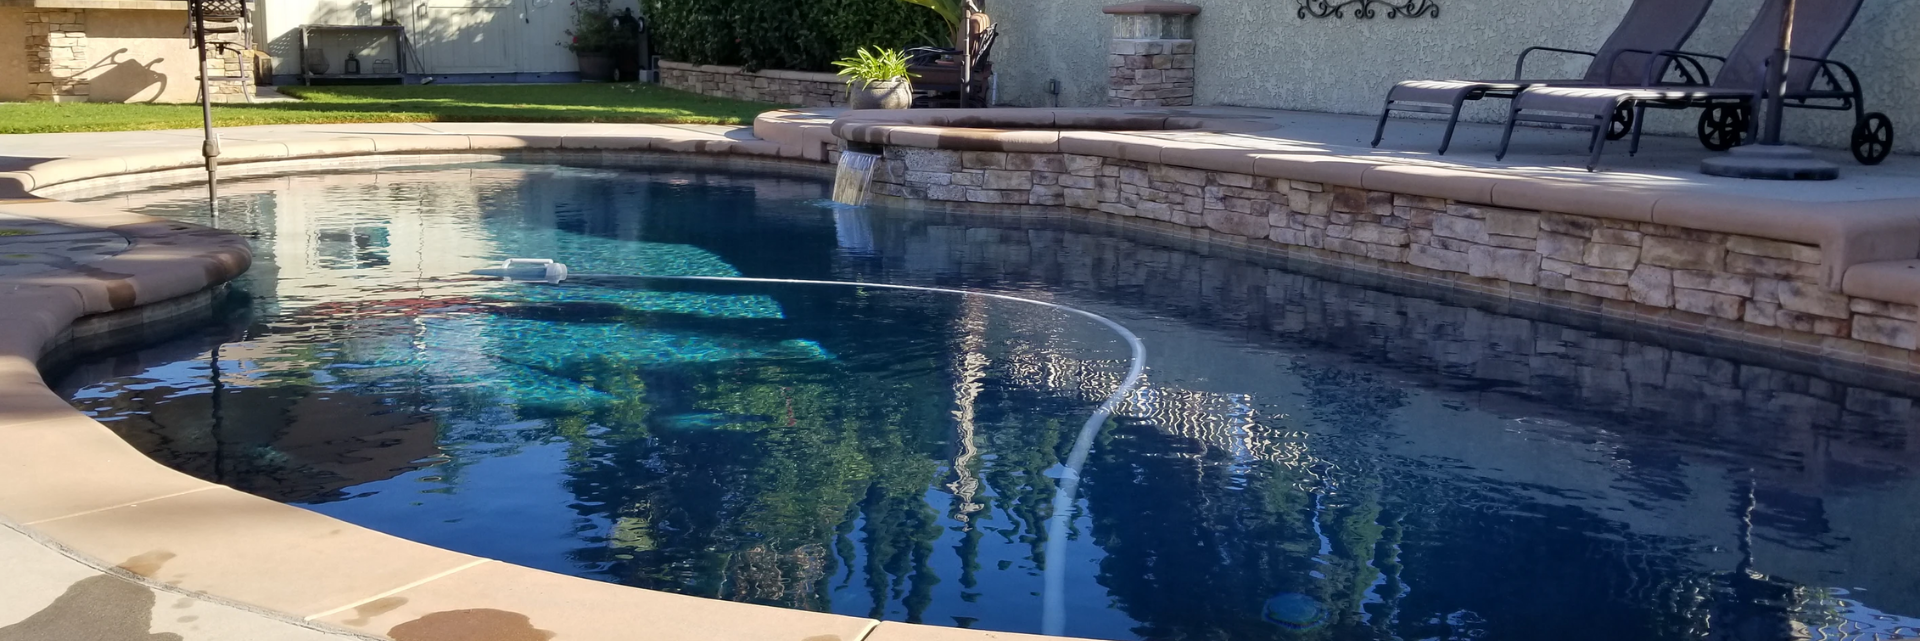 new backyard pool with spa